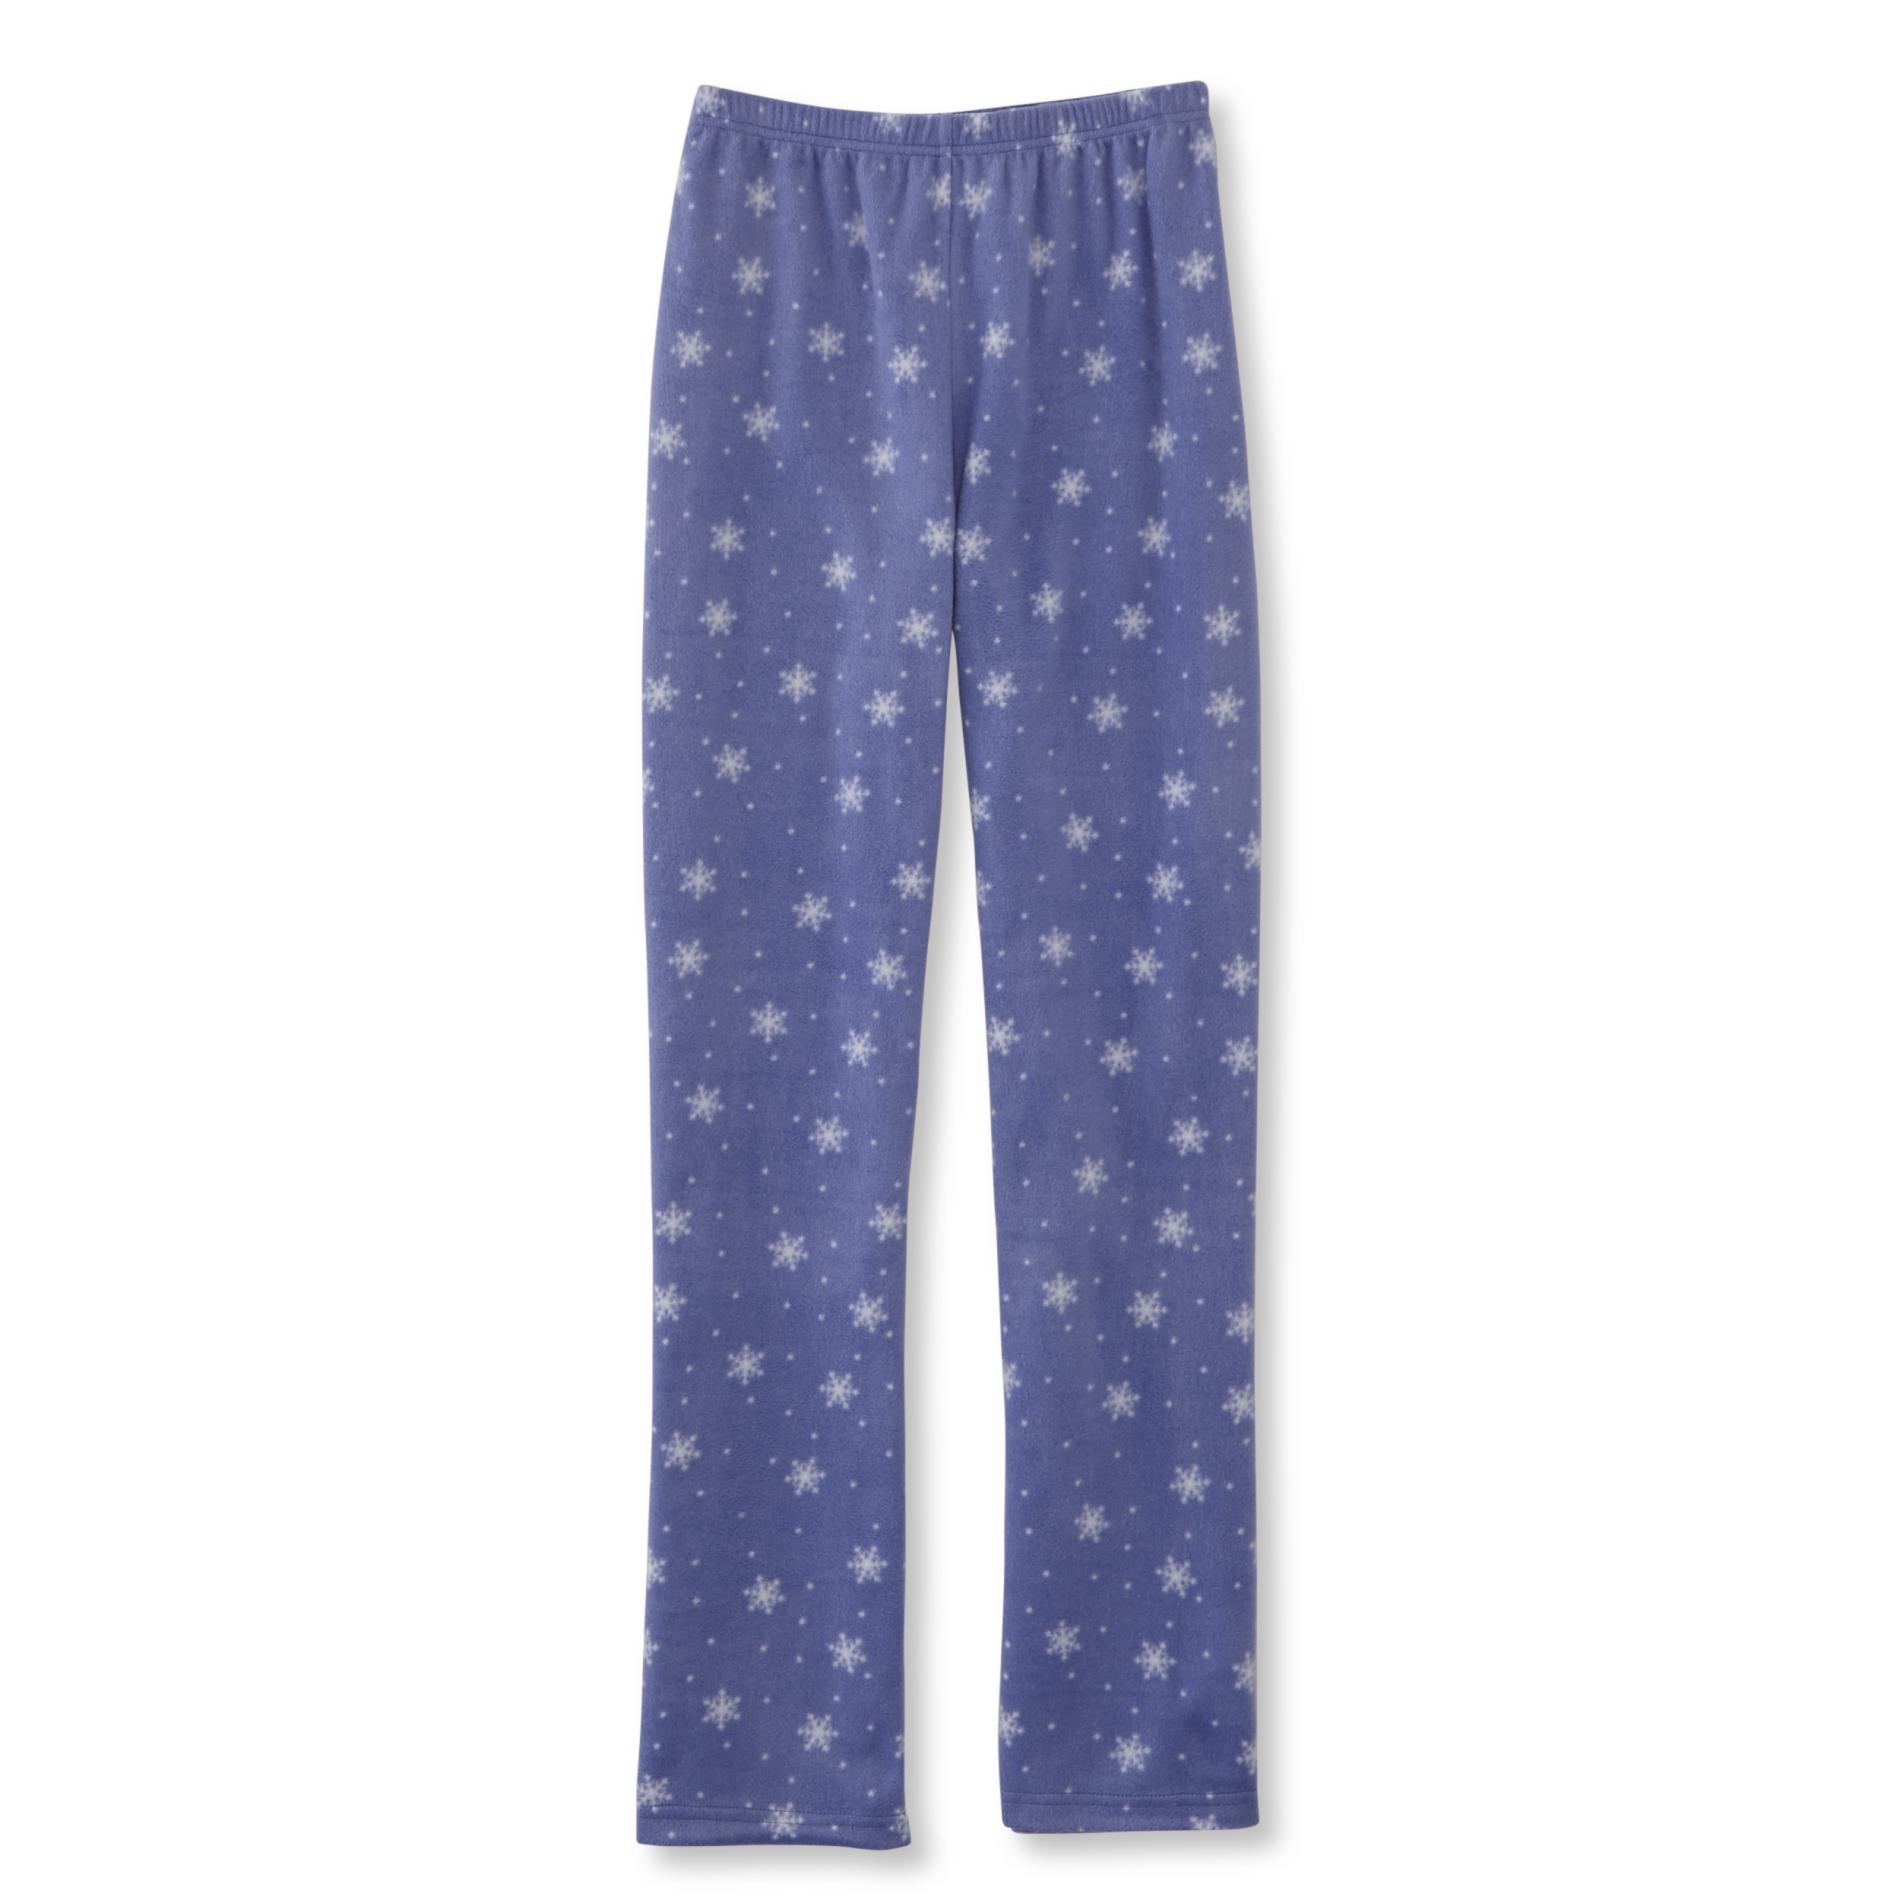 Women's Fleece Pajama Pants - Snowflakes